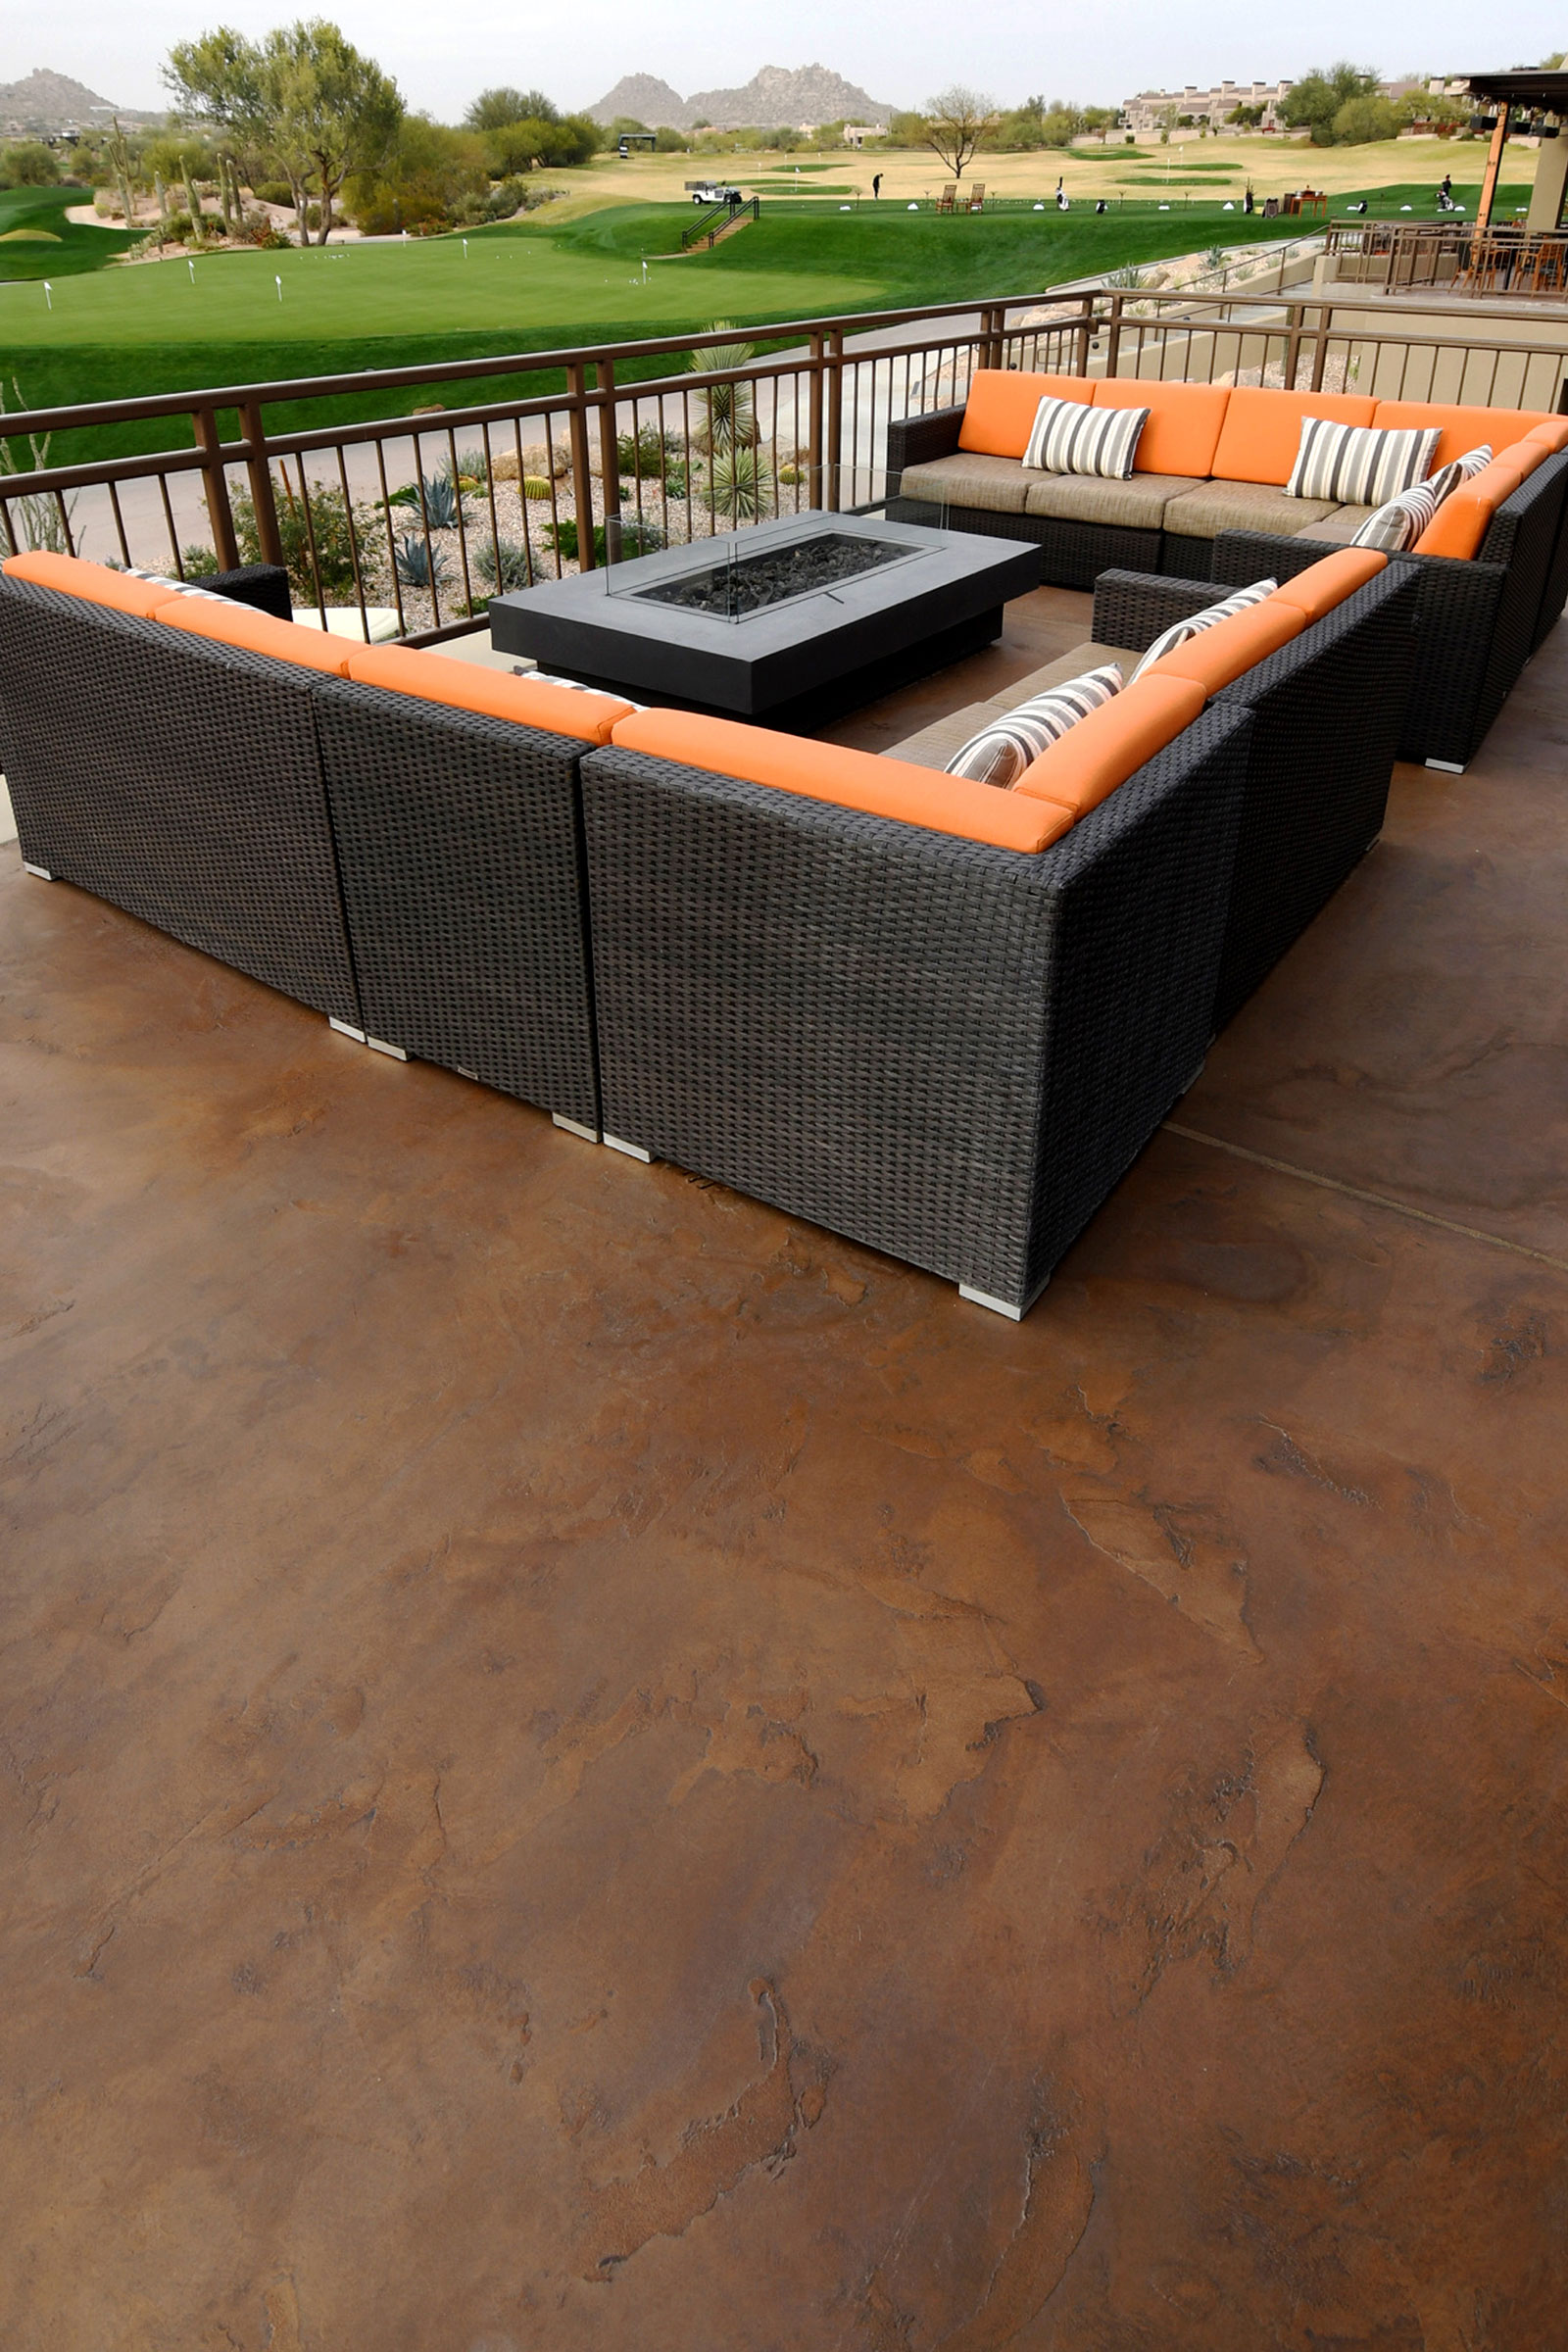 Waterproofing-Systems-Improve-Decks_macoat-texture-crete-custom-patio-commercial-space-3456x5814-300dpi-Amanda-Cataroja